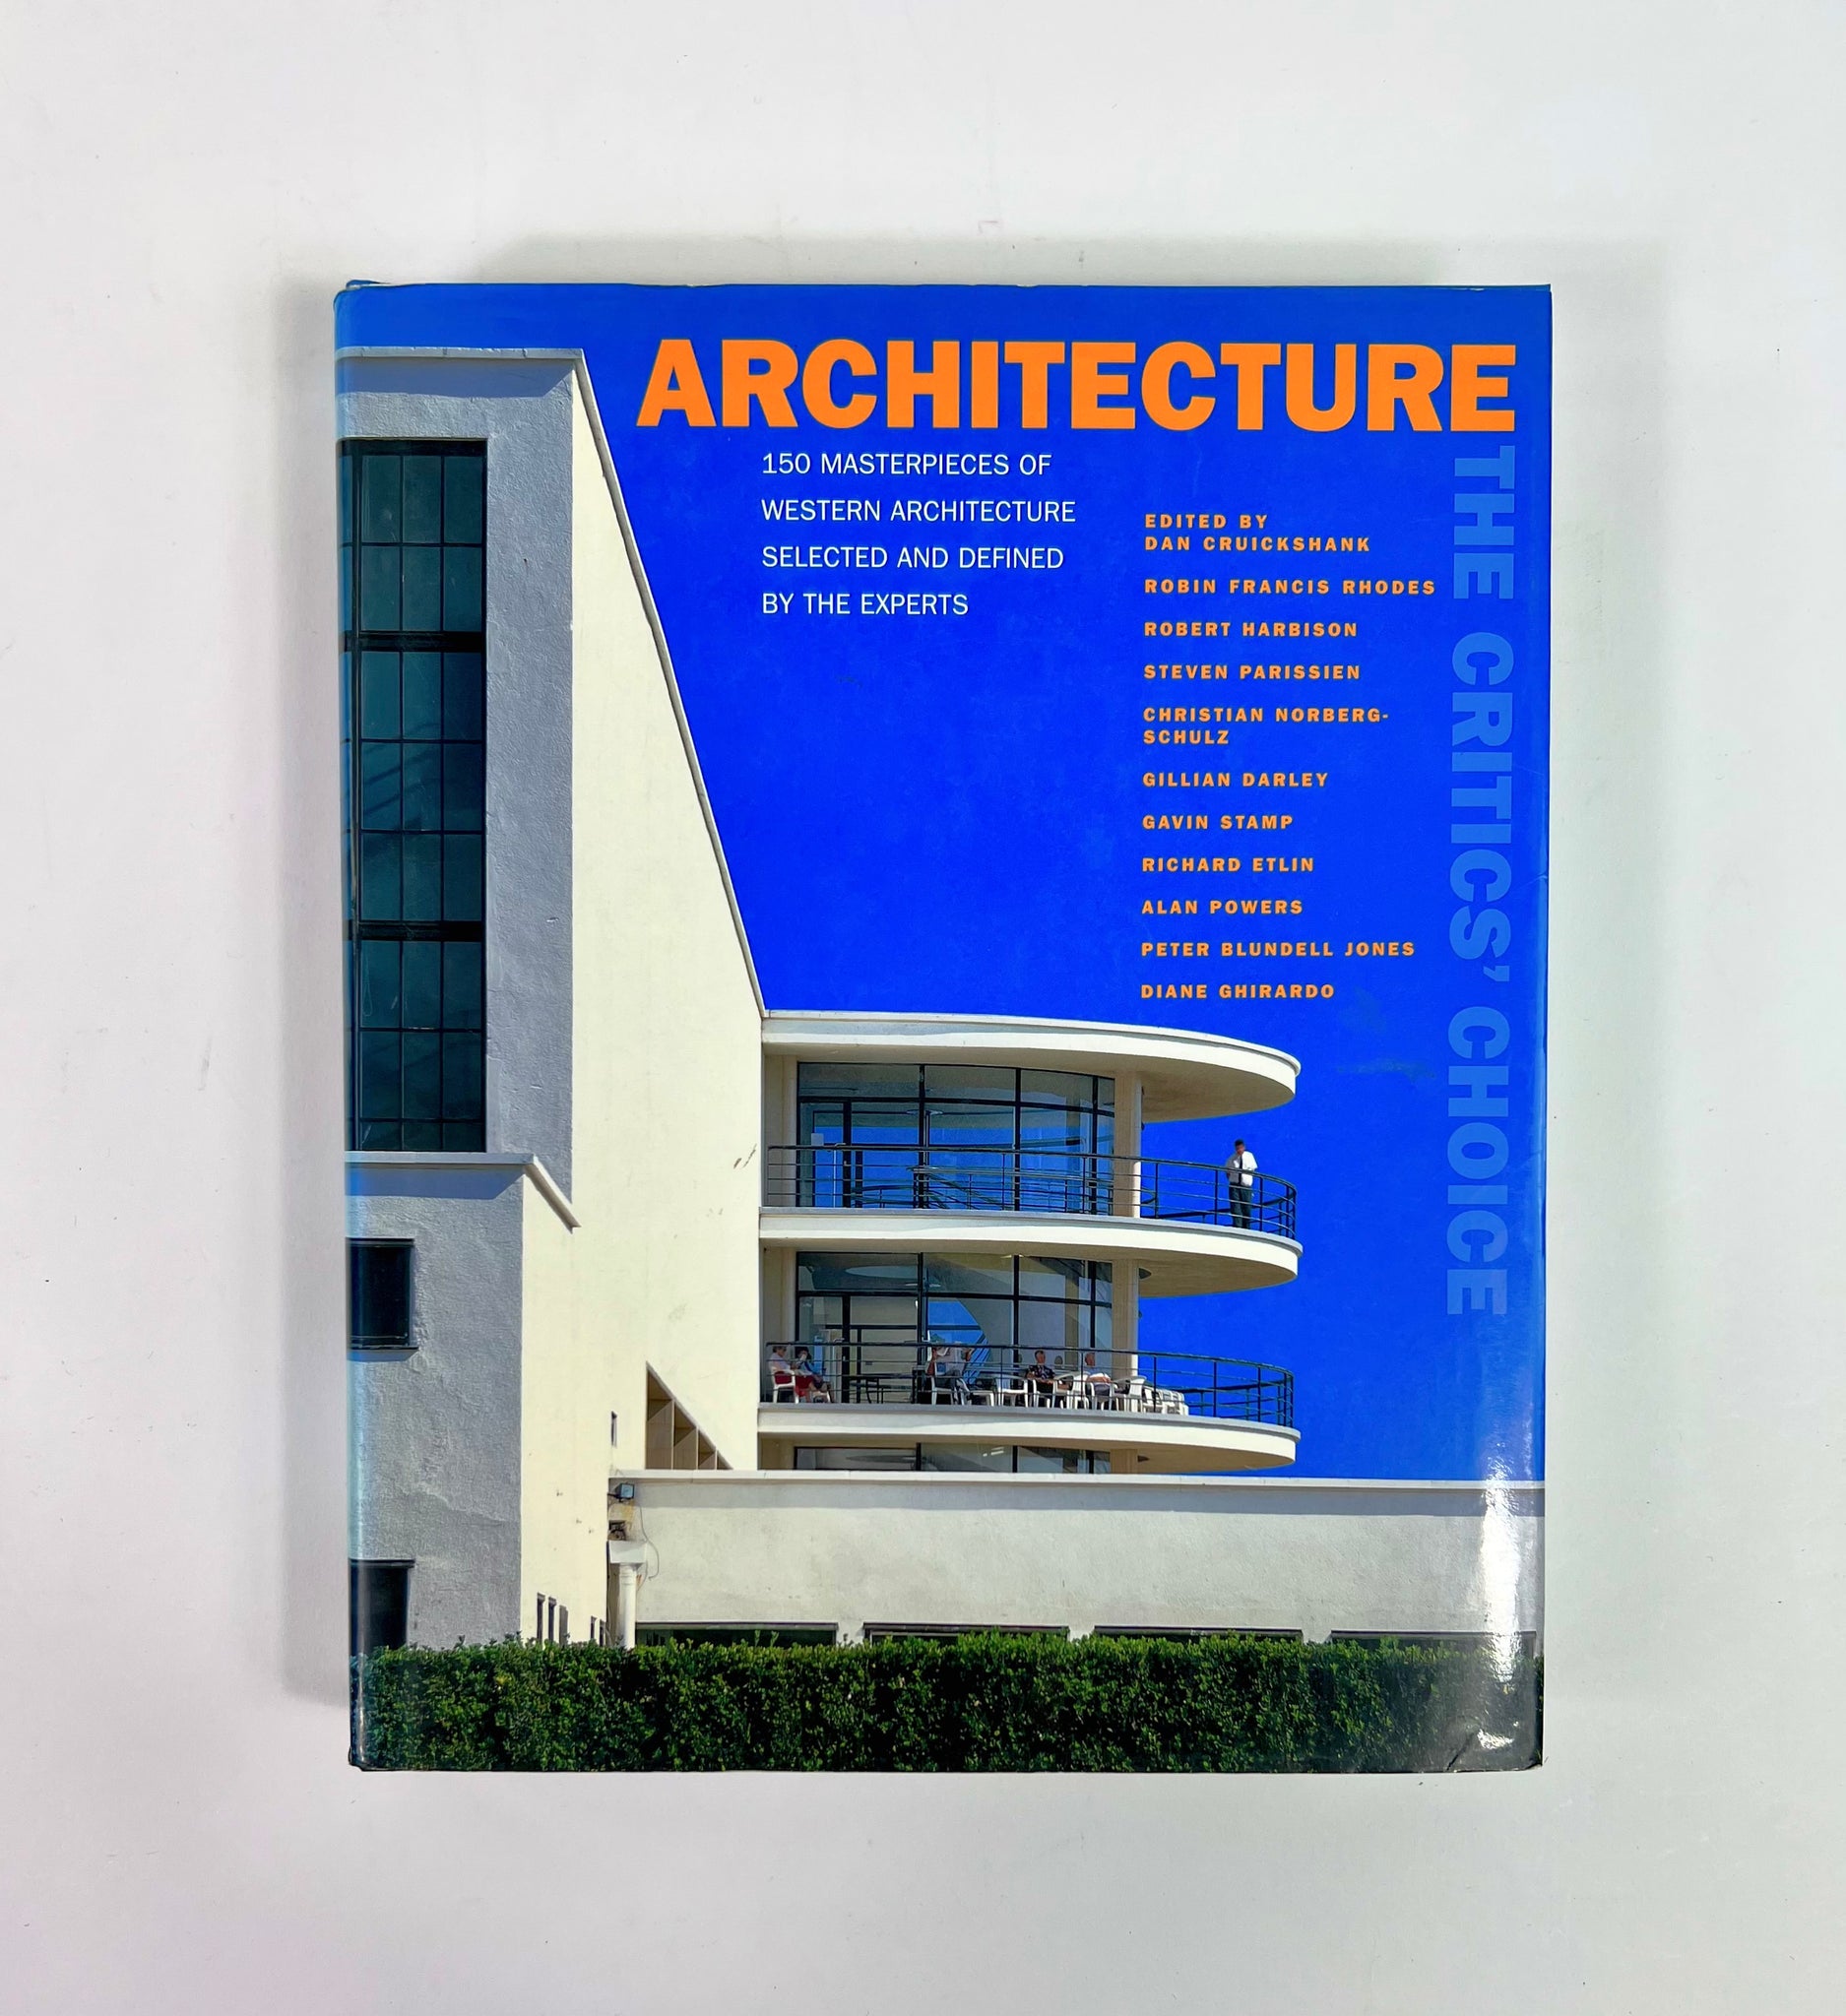 CRUICKSHANK, Dan. Architecture: The Critic's Choice.